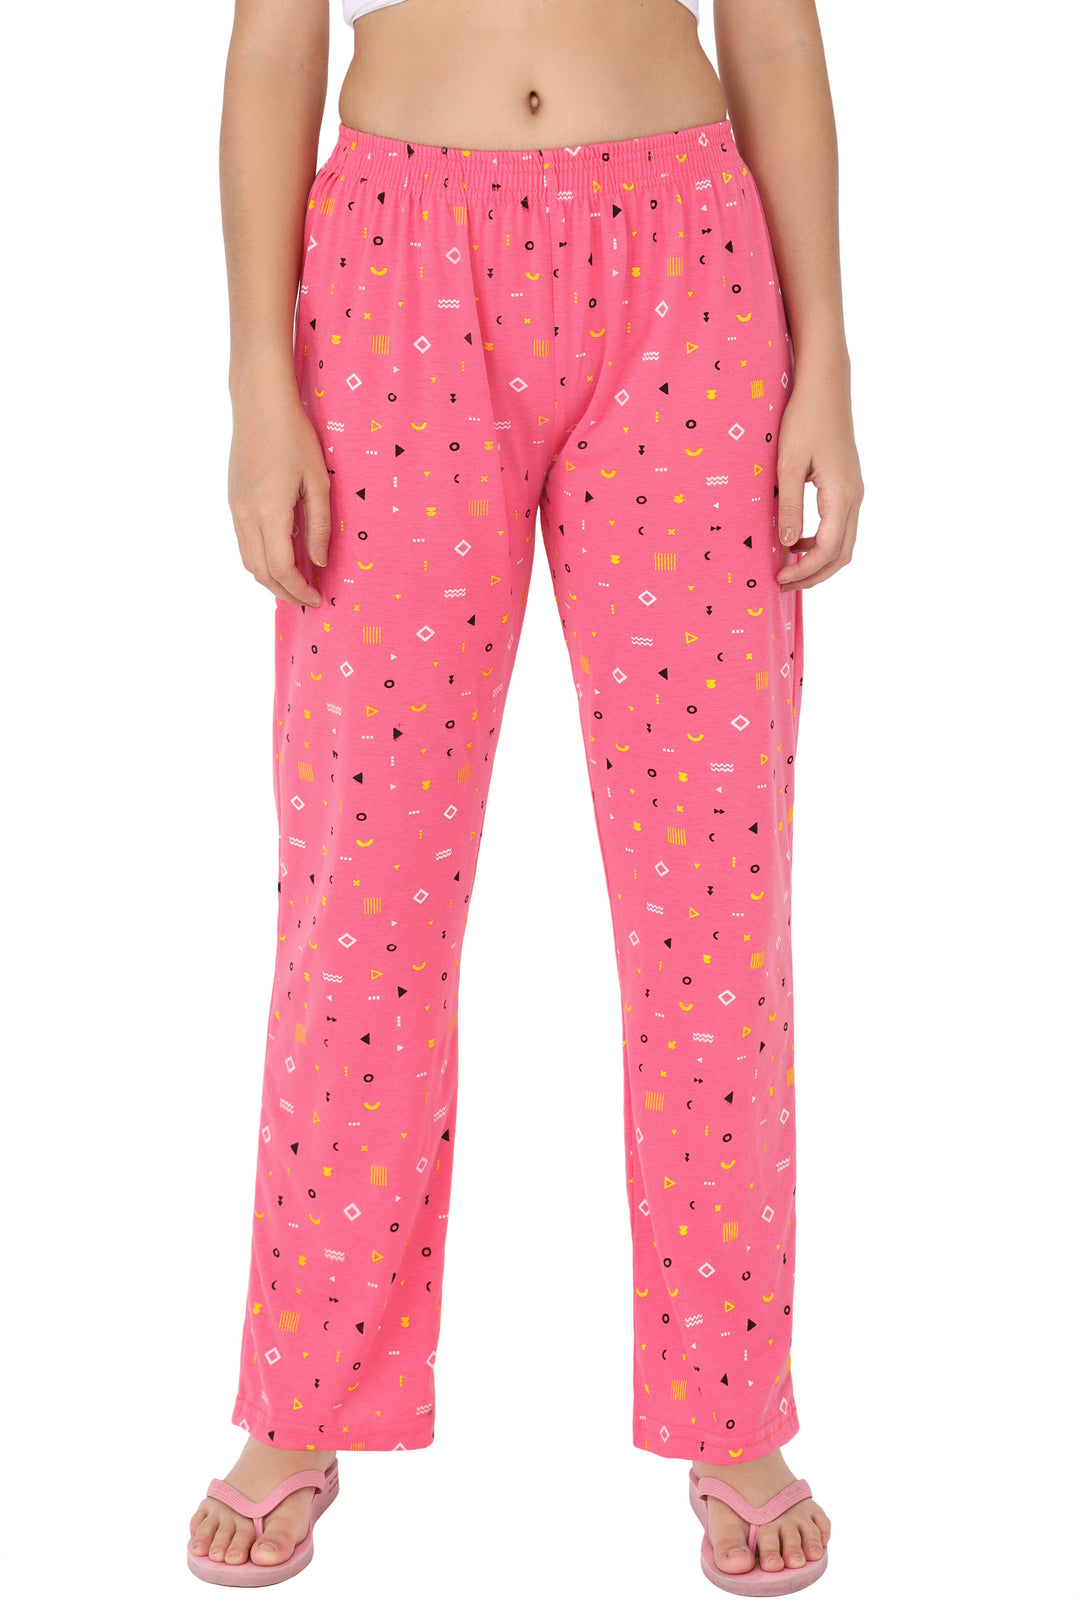 Buy Fflirtygo Women Palazzo Pants Cotton Combo Pack, Night Pyjamas